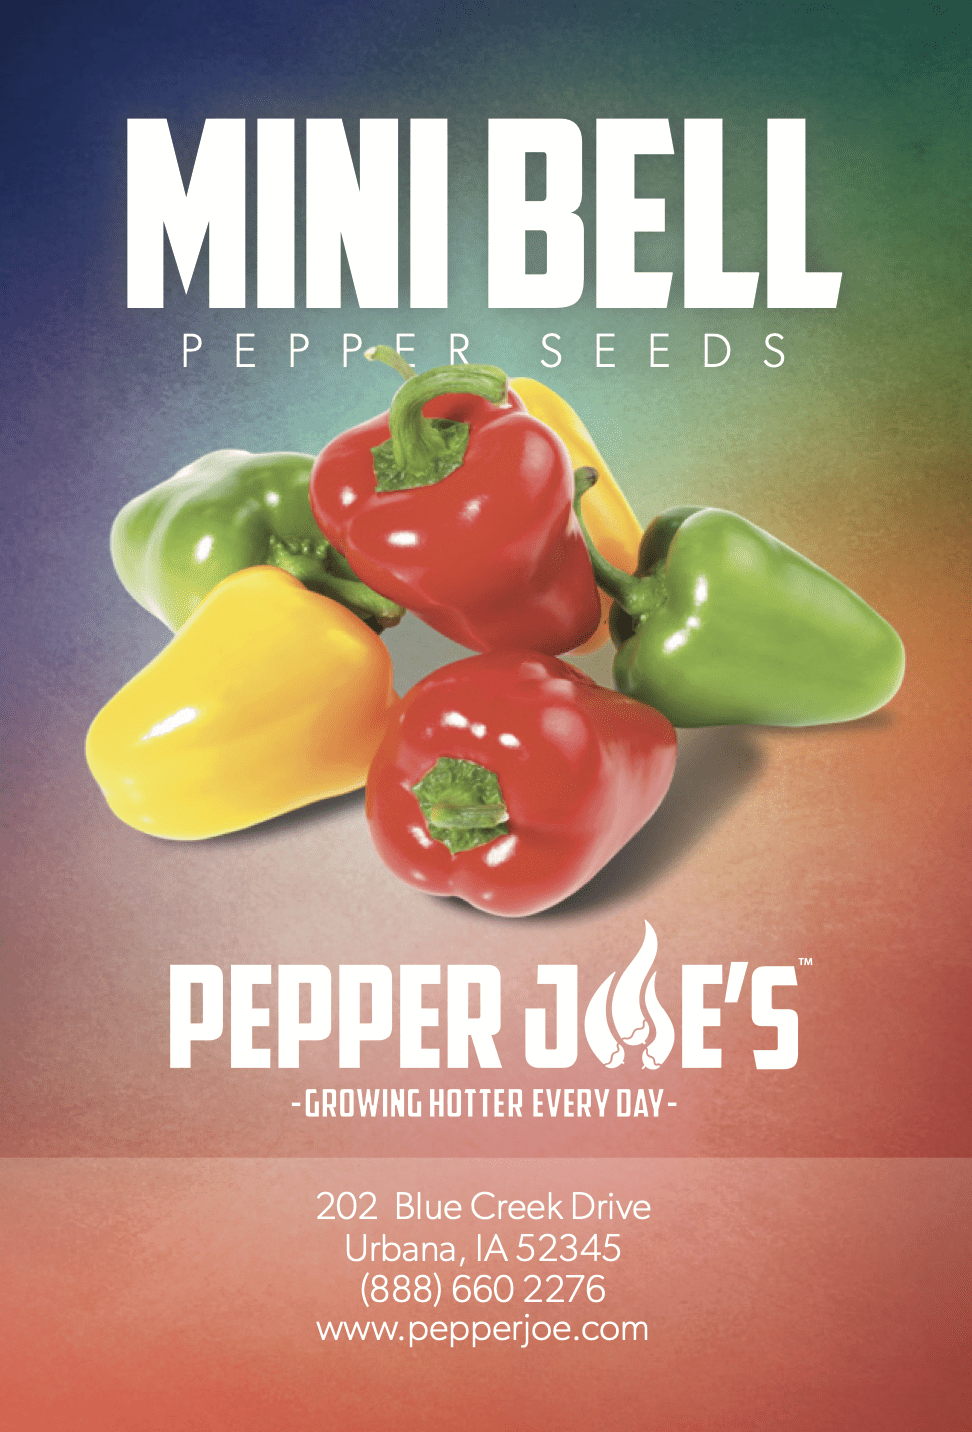 Pepper Joe's Mini Bell seeds - seed label of mini bell sweet peppers